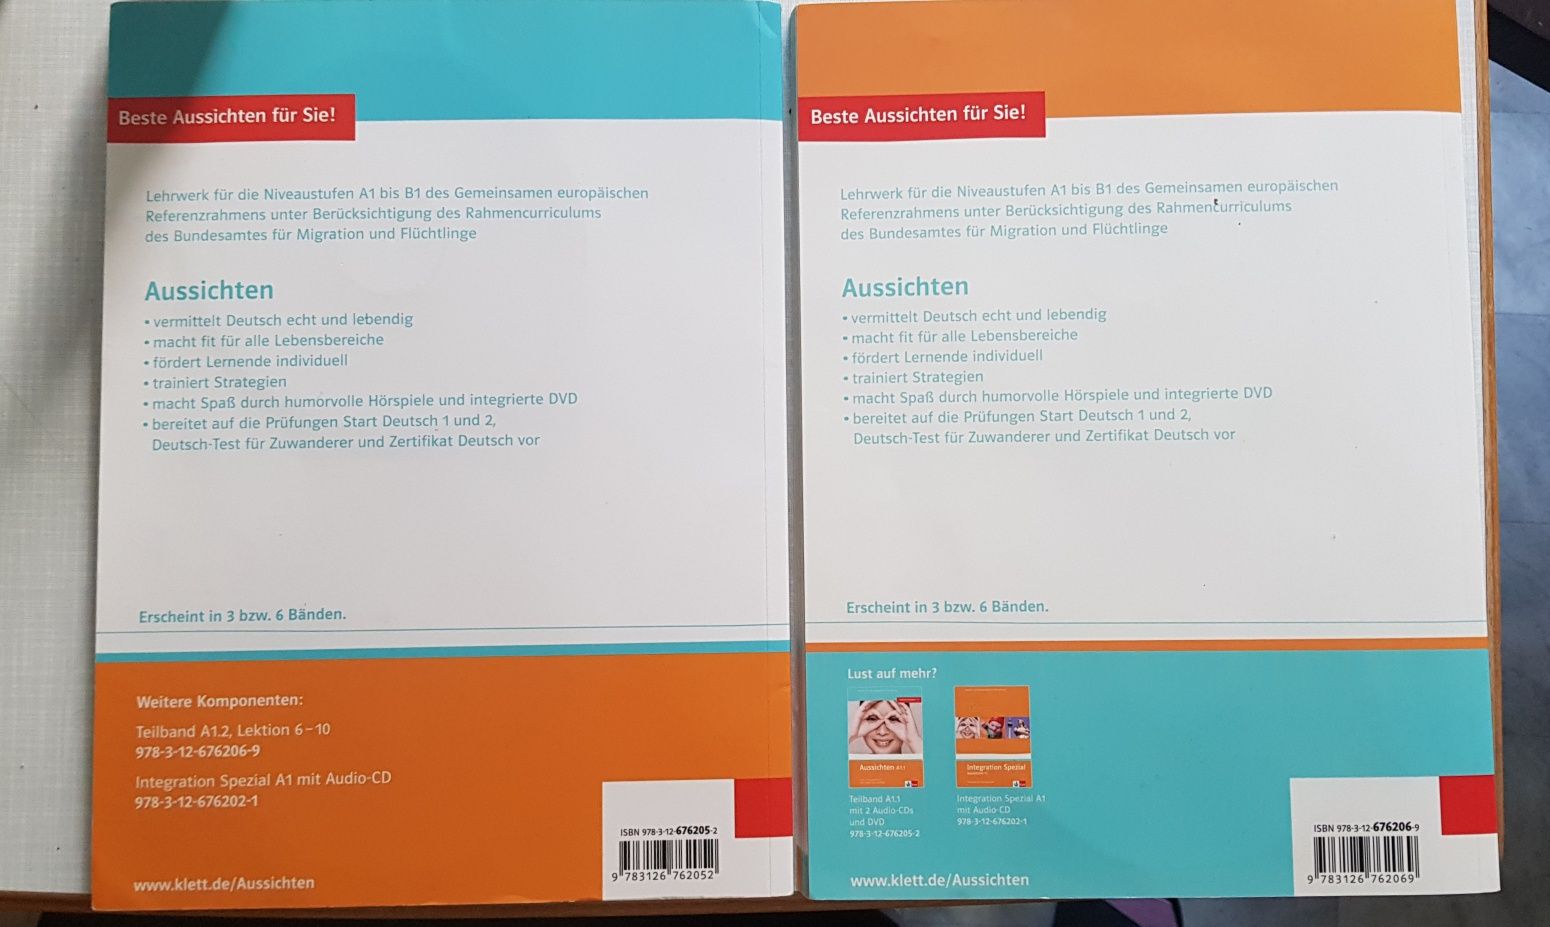 Підручники з німецької мови A1. Klett - Aussichten 1.1  и Aussichten 1